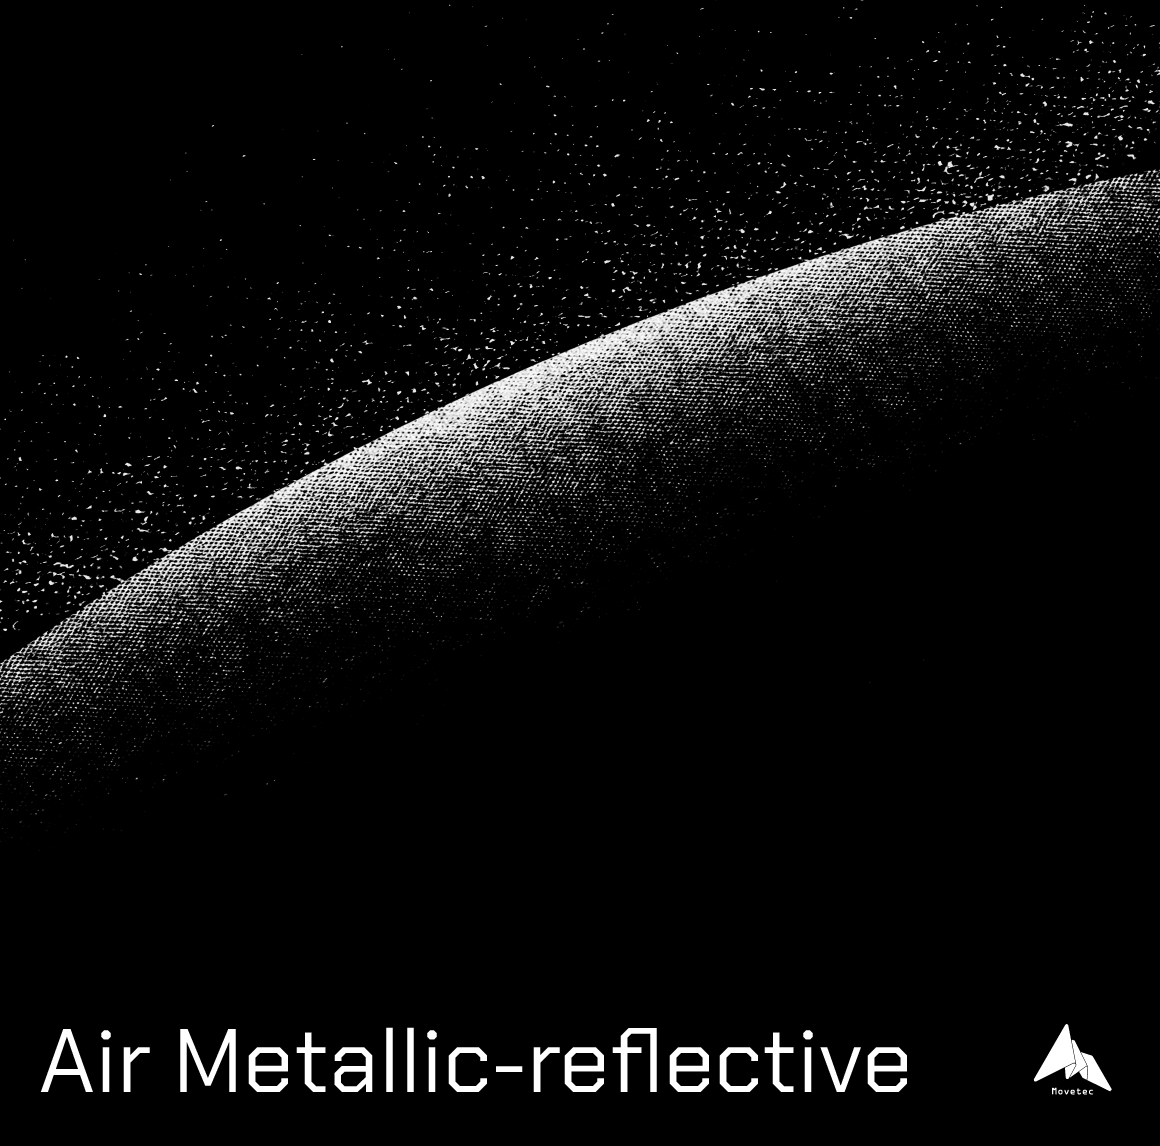 Air Metallic-reflective